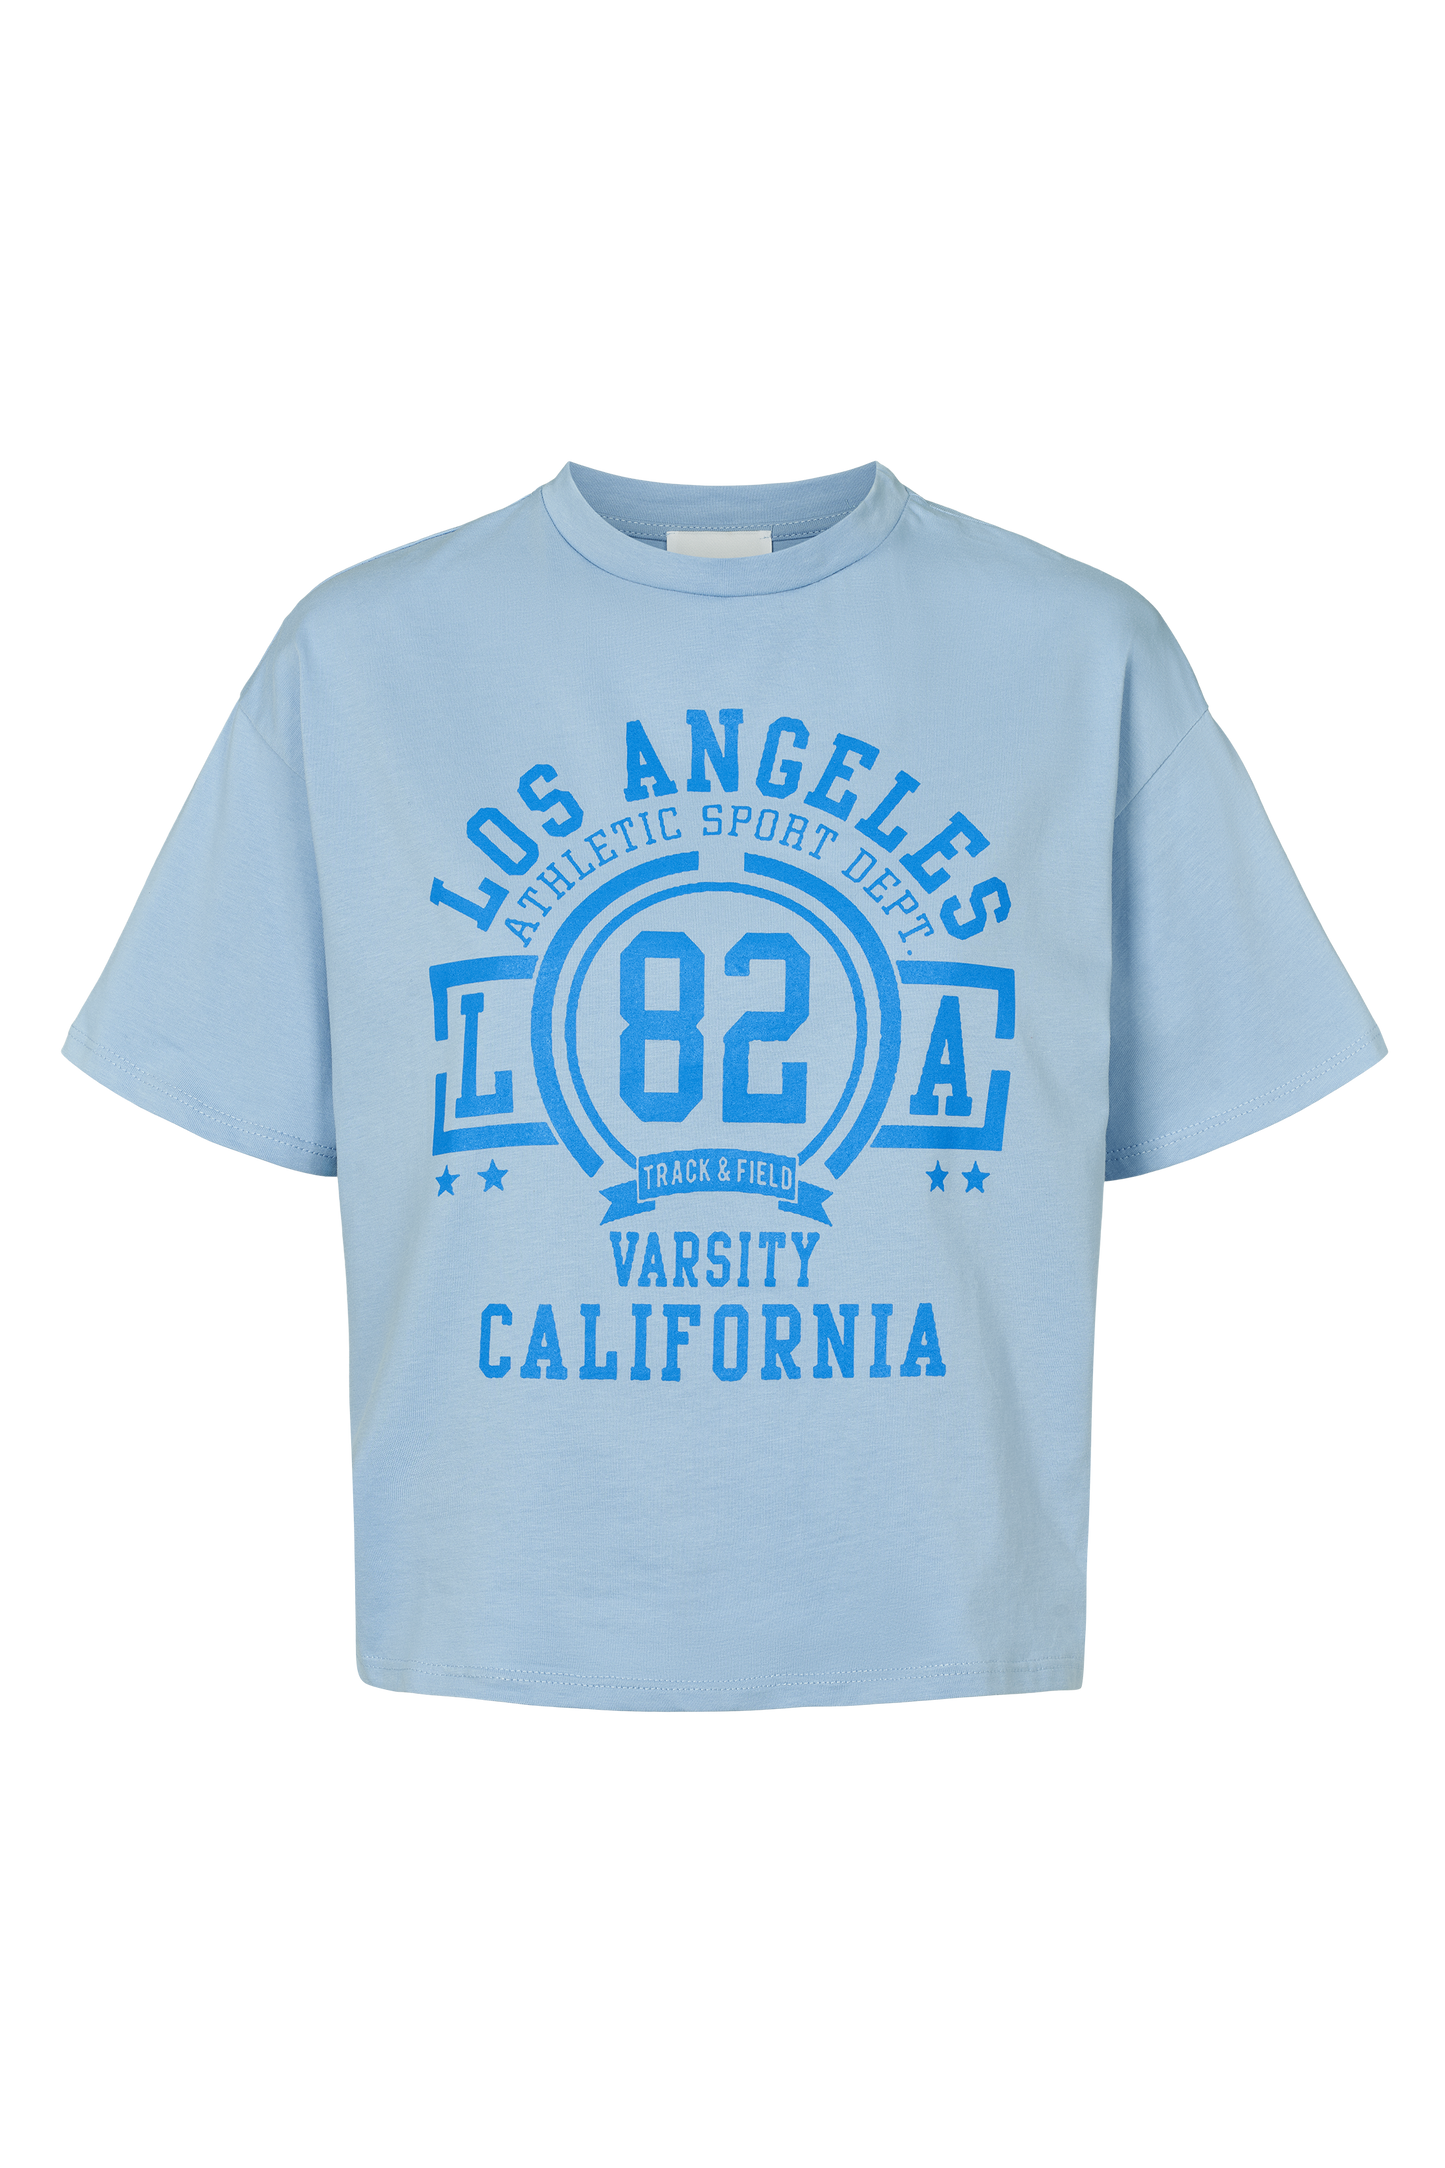 T-Shirt Cropped Light Blue LA California Cotton Tee W/Blue Letters